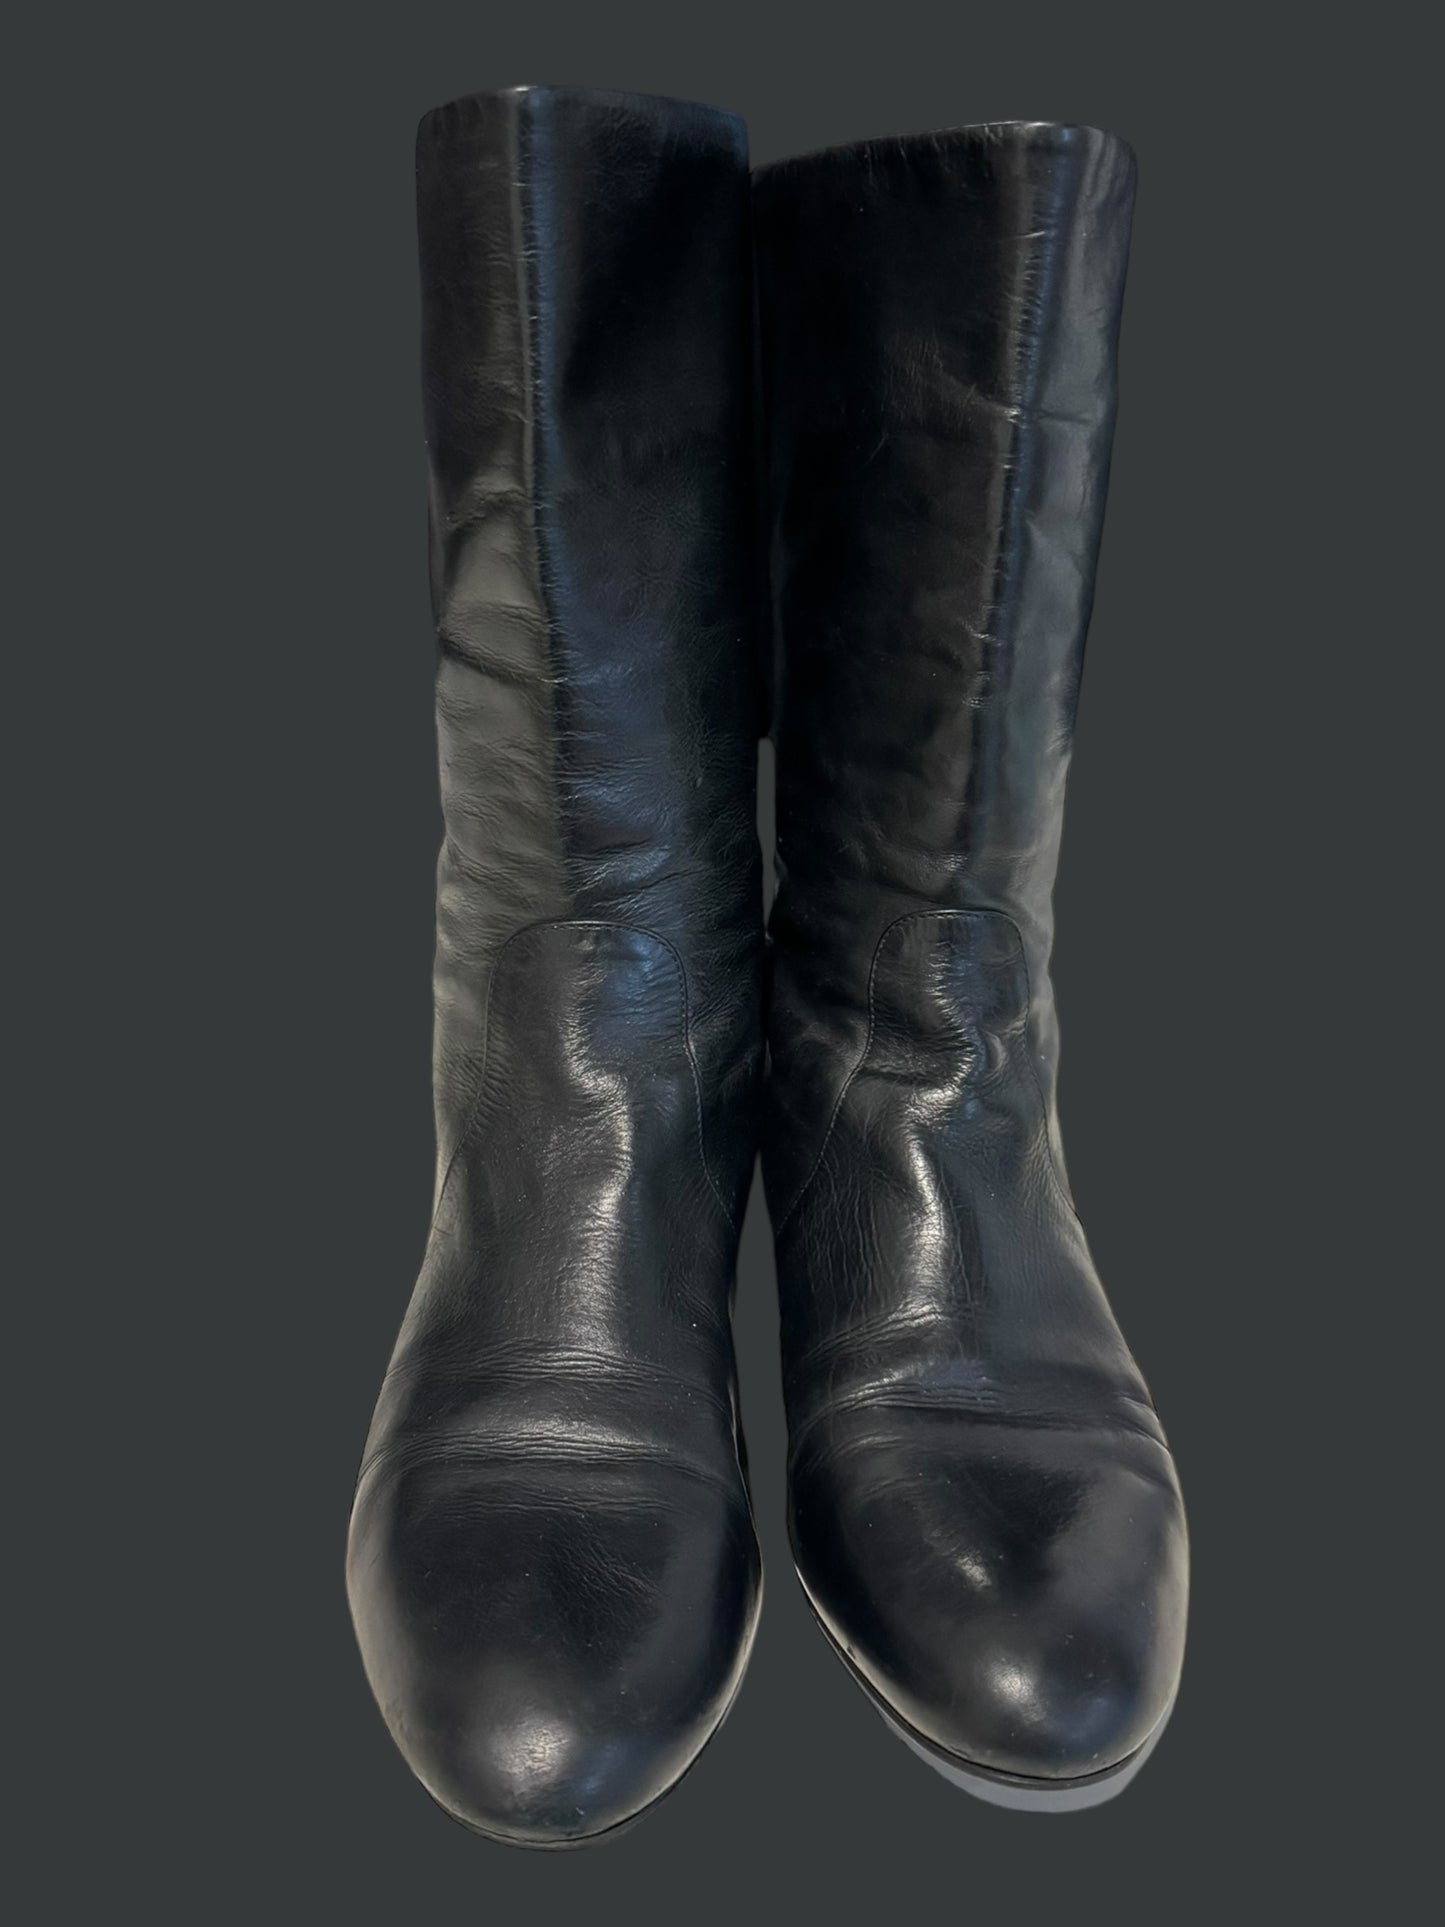 PRADA black boots size 10